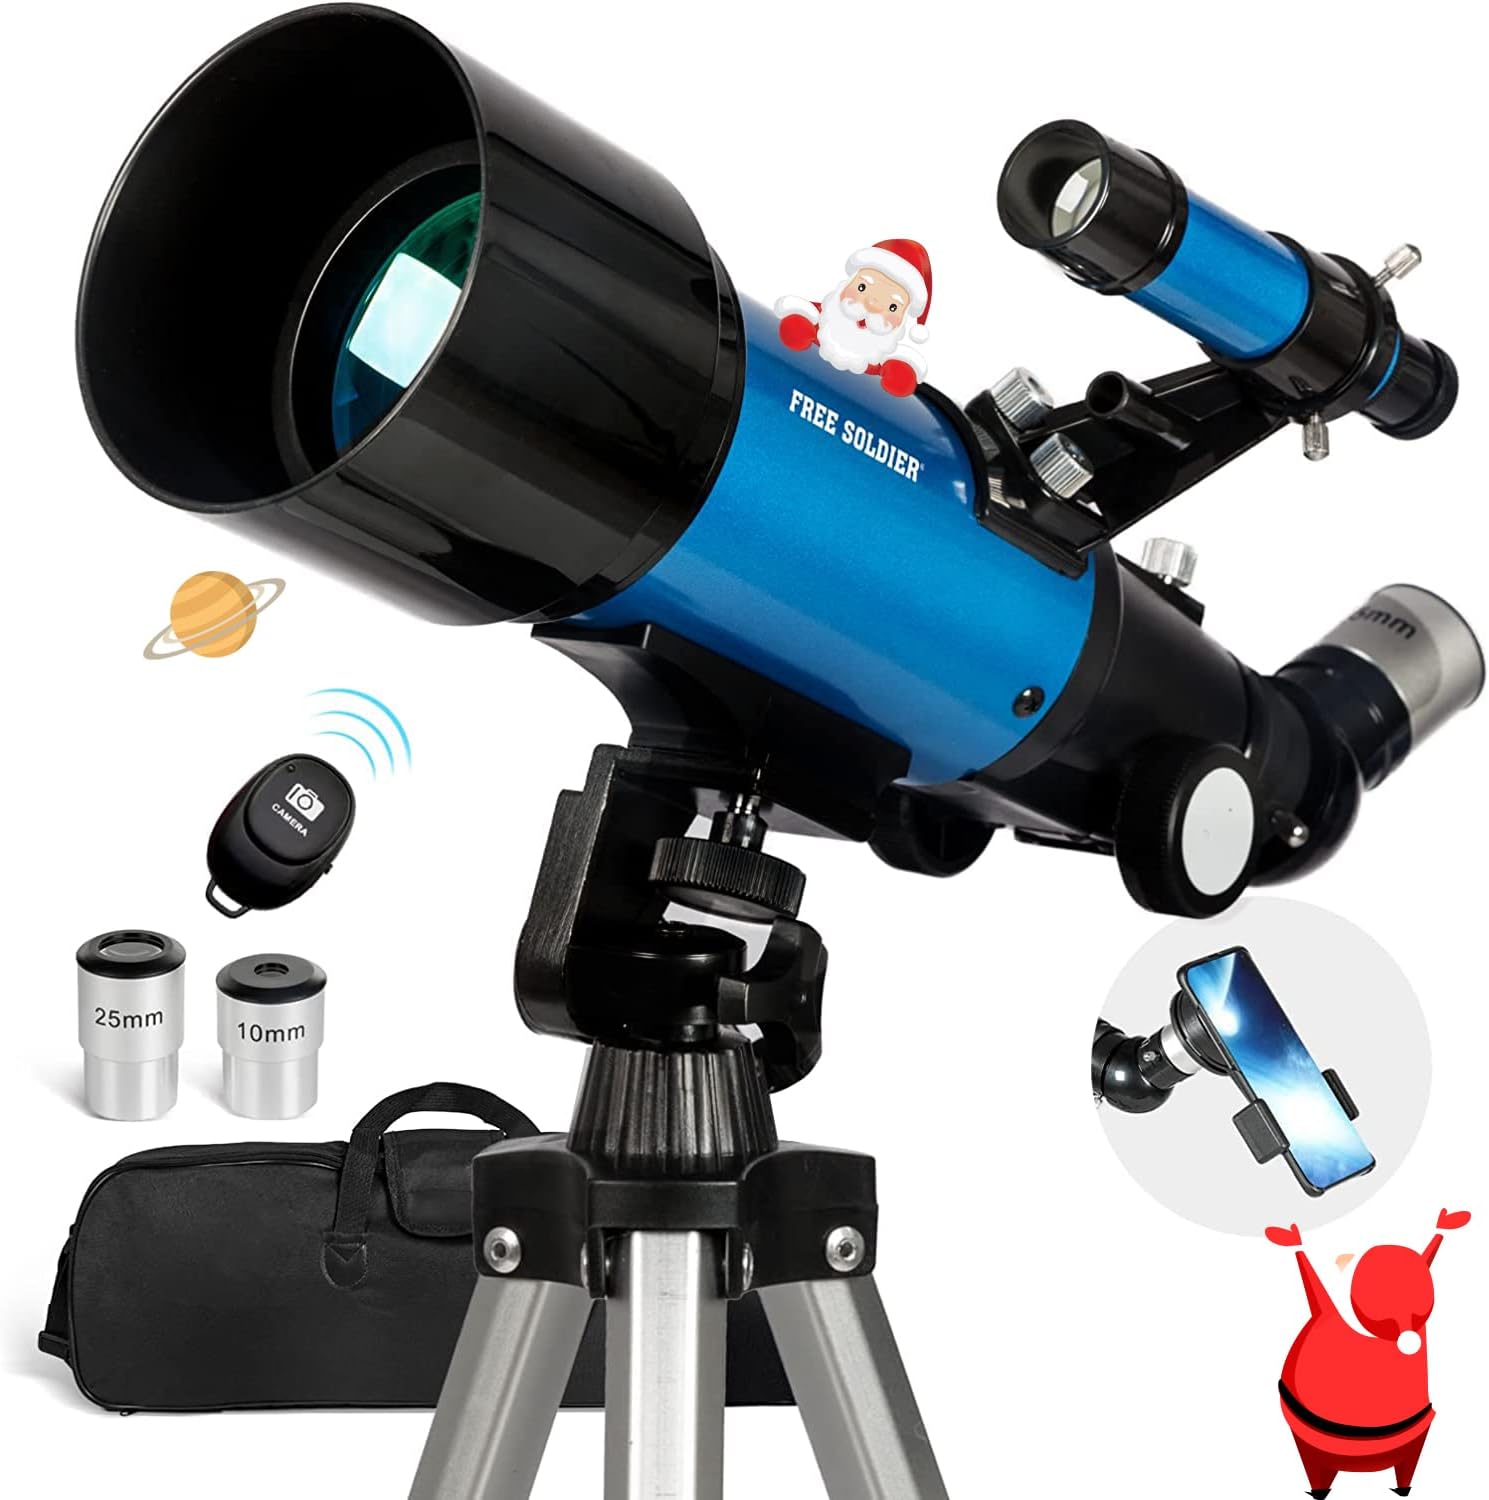 FreeSoldier 500X80mm Telescope, Powerful Magnification, Superior Optics, Adjustable Tripod